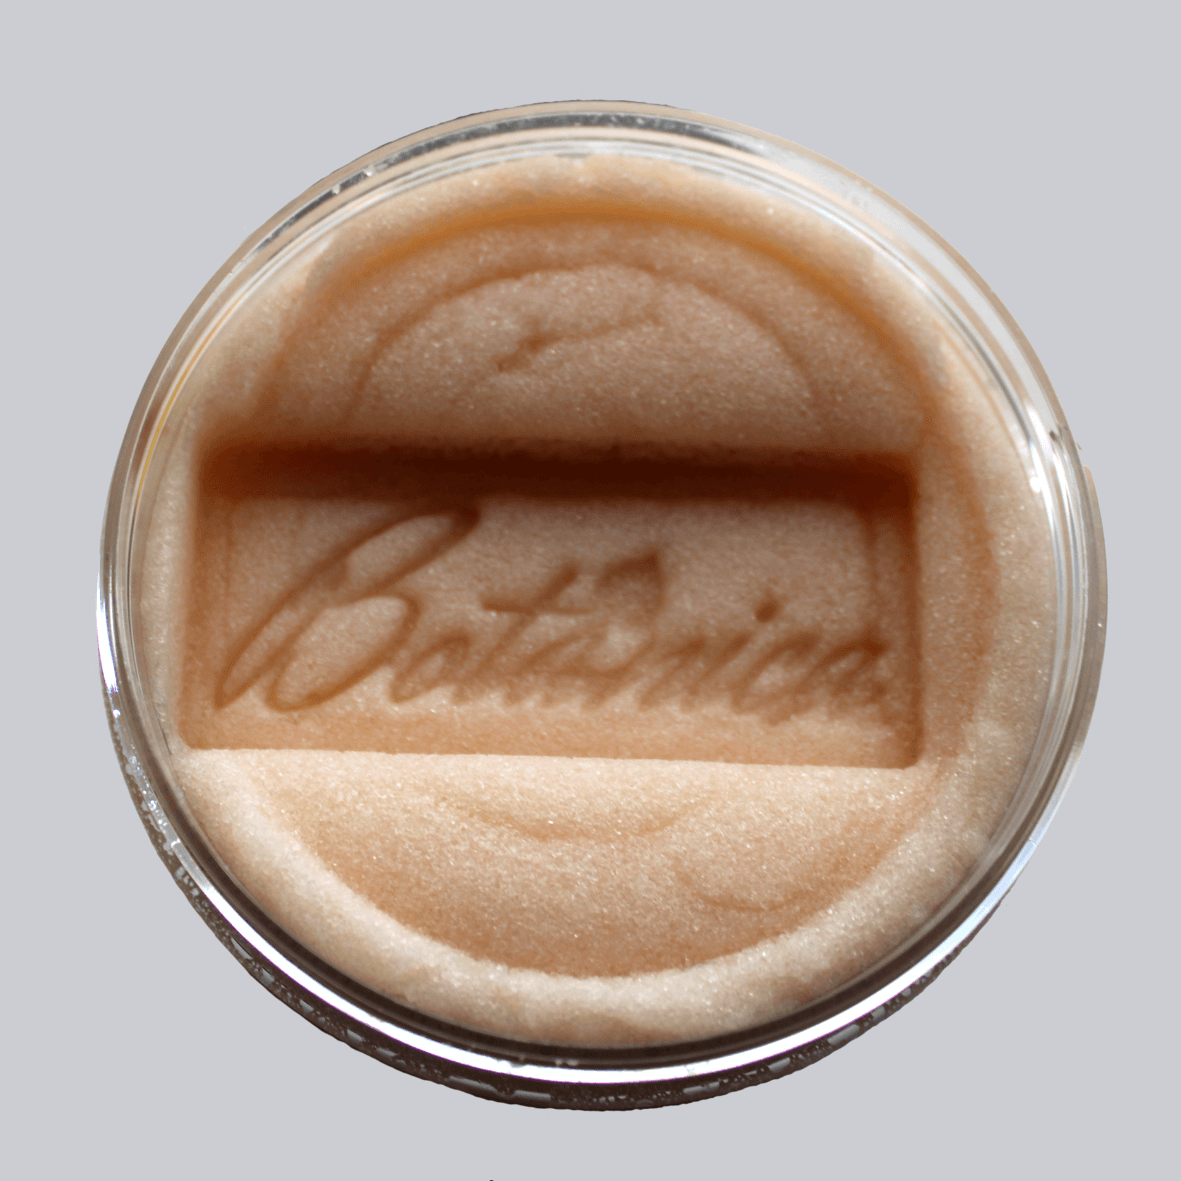 Open jar of sugar body scrub showing the texture, stamped "Botanica" AlpacaSoaps Alpaca Soaps, Tan, Honey Oatmeal